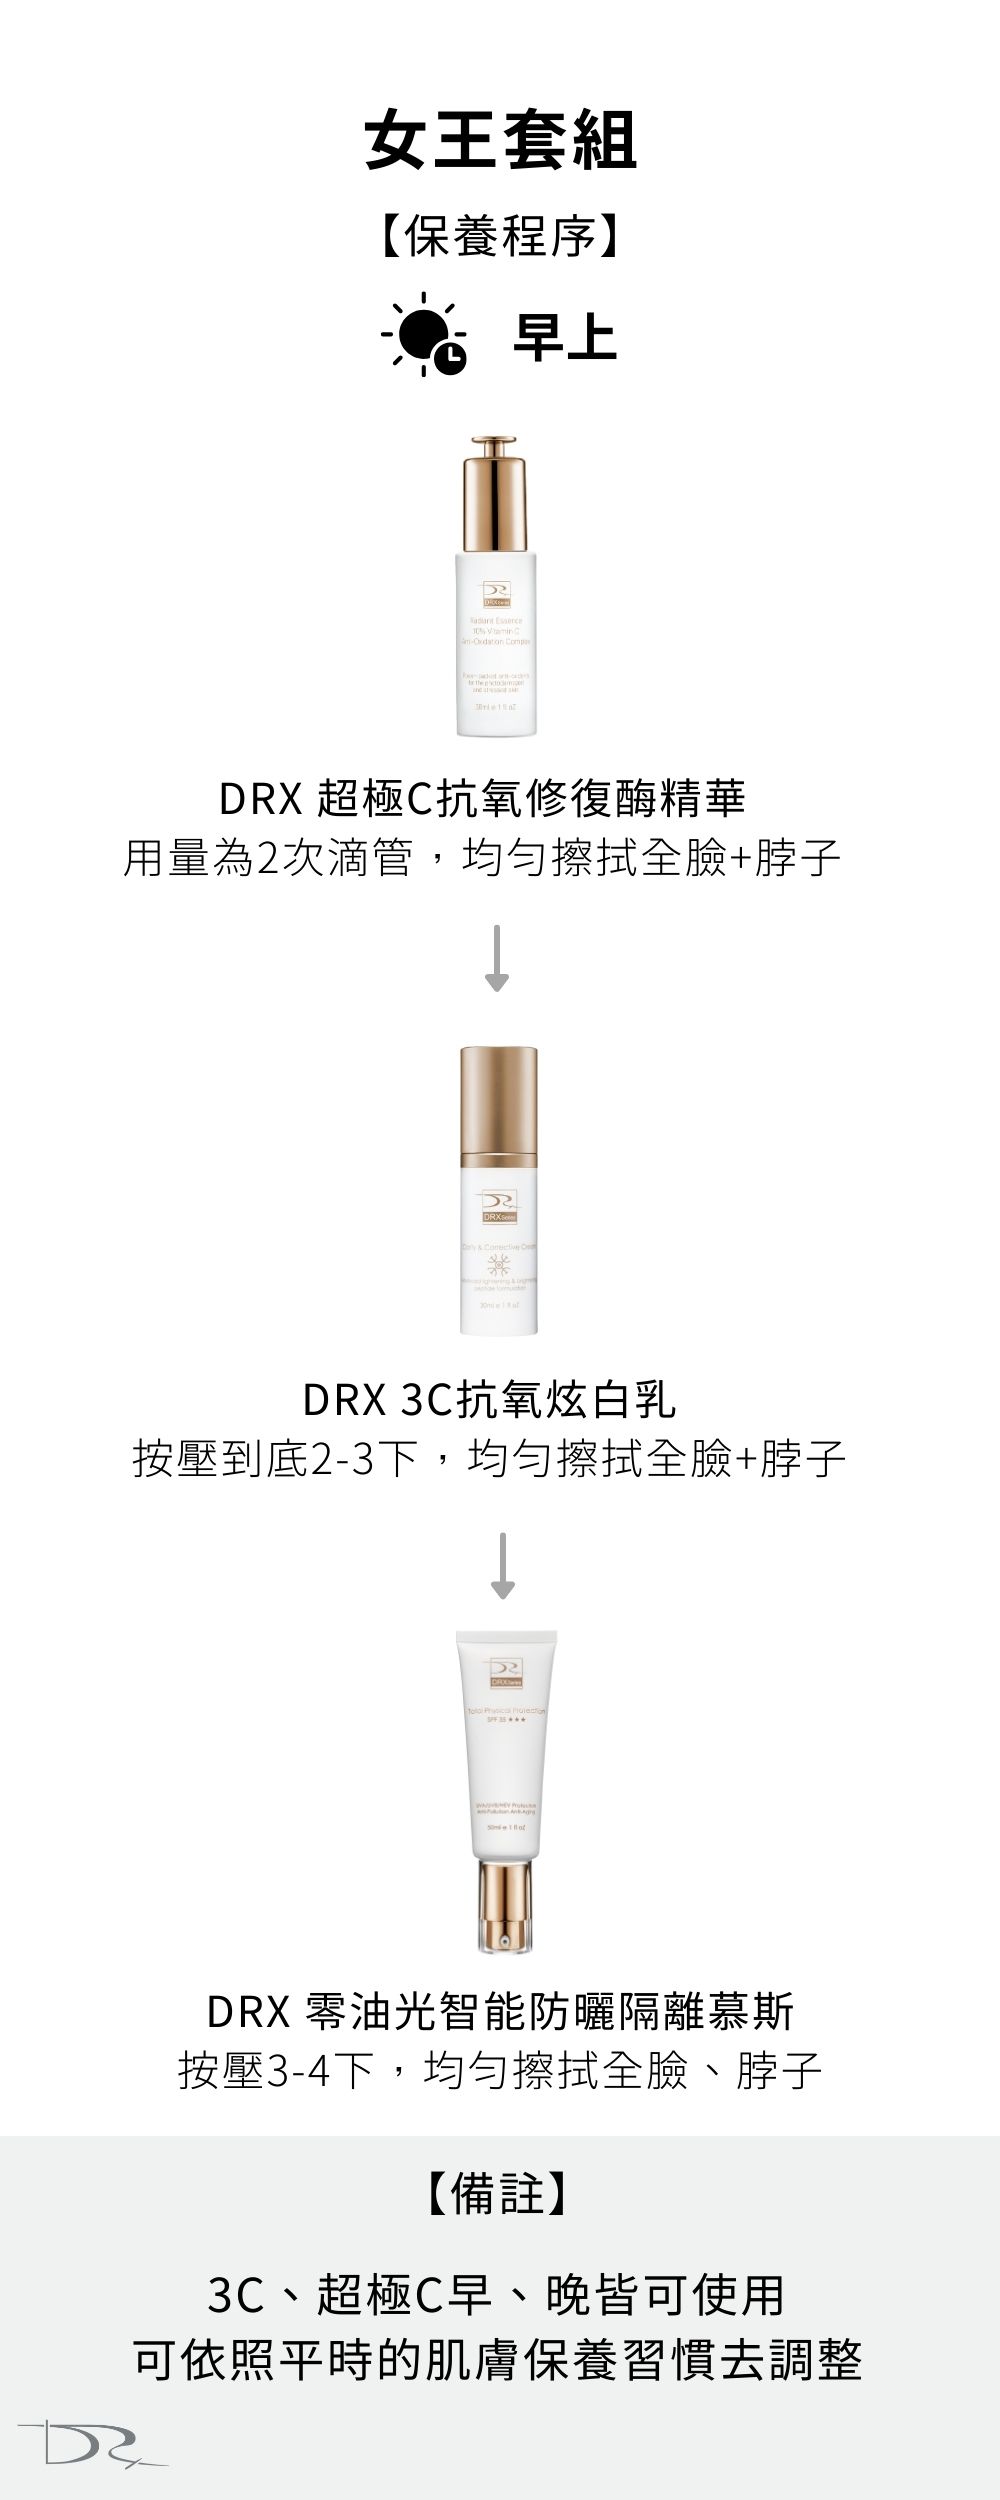 DRX達特仕的肌膚暗沉保養品系列-女王套組，能夠為您的肌膚帶來多重功效。幫助您改善肌膚暗沉、老化、缺水和色斑等問題，恢復膚色均勻和明亮度，同時還能夠有效防曬並控油。如果你需要肌膚暗沉系列保養品，就到DRX達特仕！